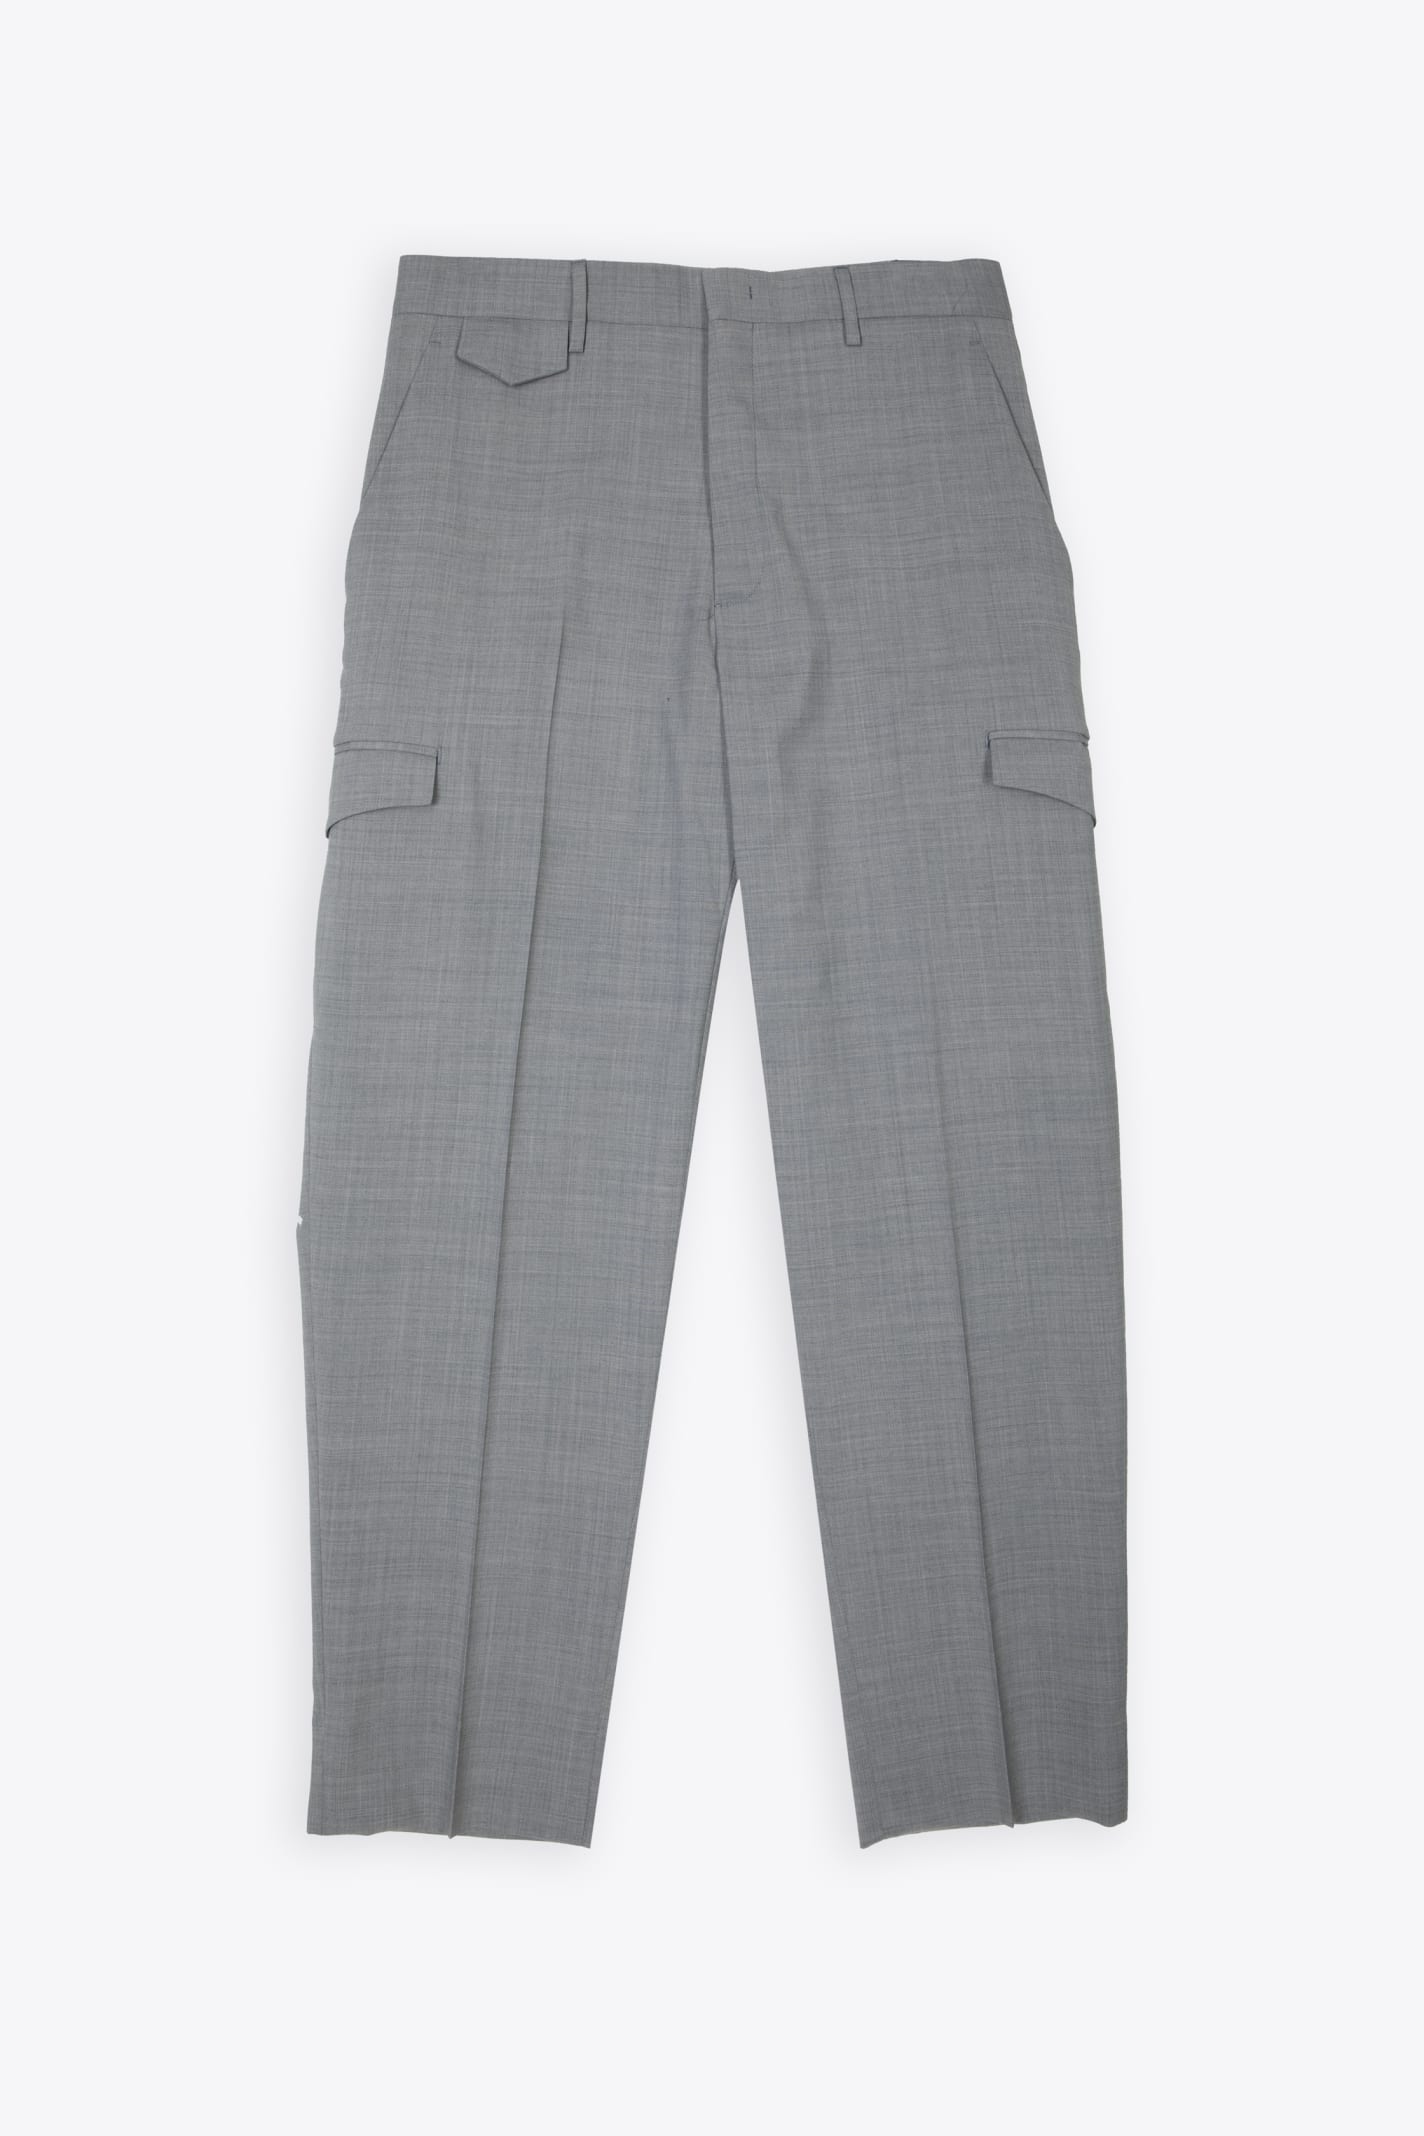 Pantalone Light grey tailored wool cargo pant - Havanas